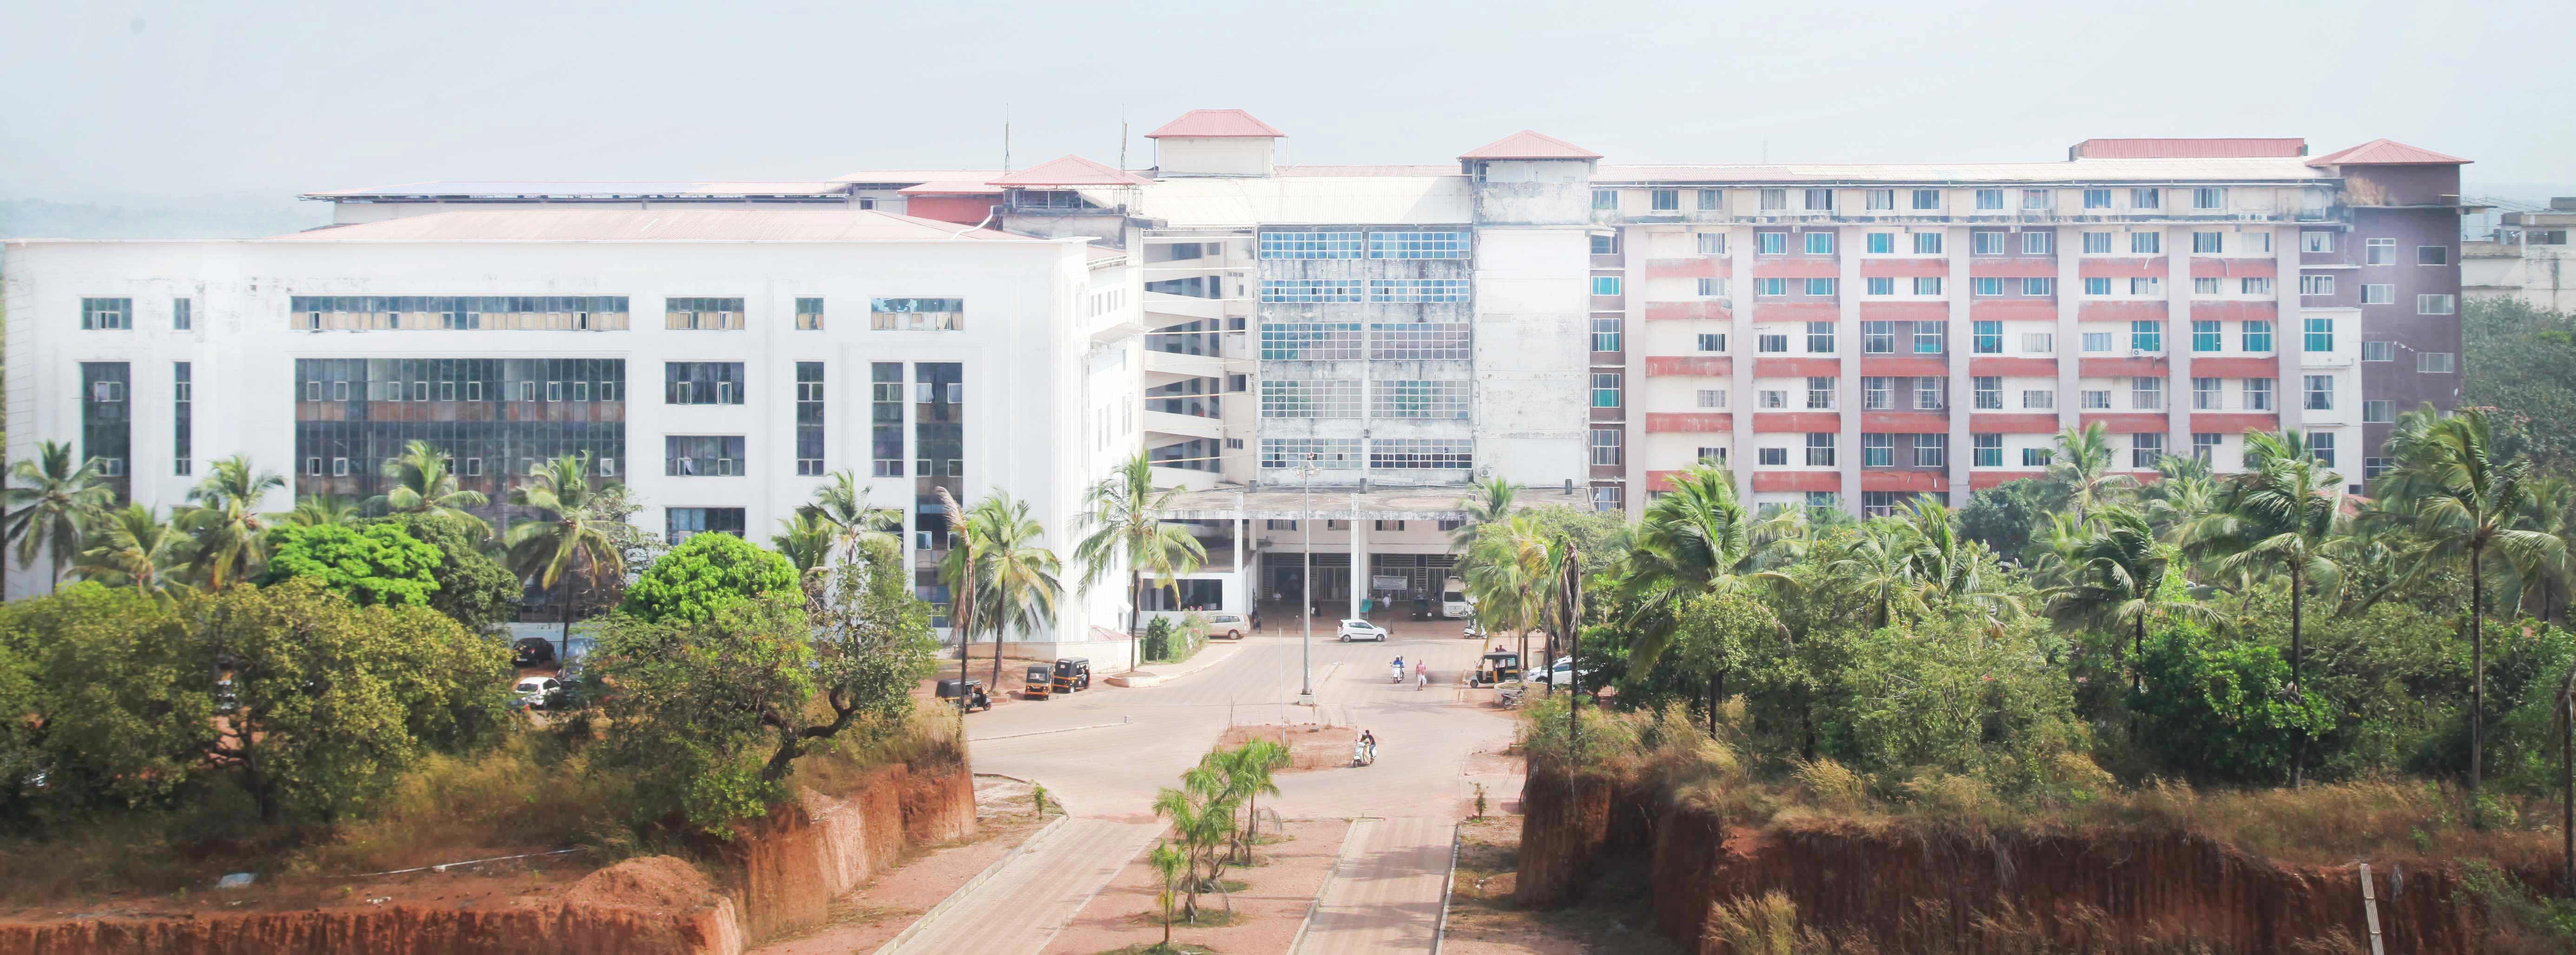 Kannur Medical College Campus Building